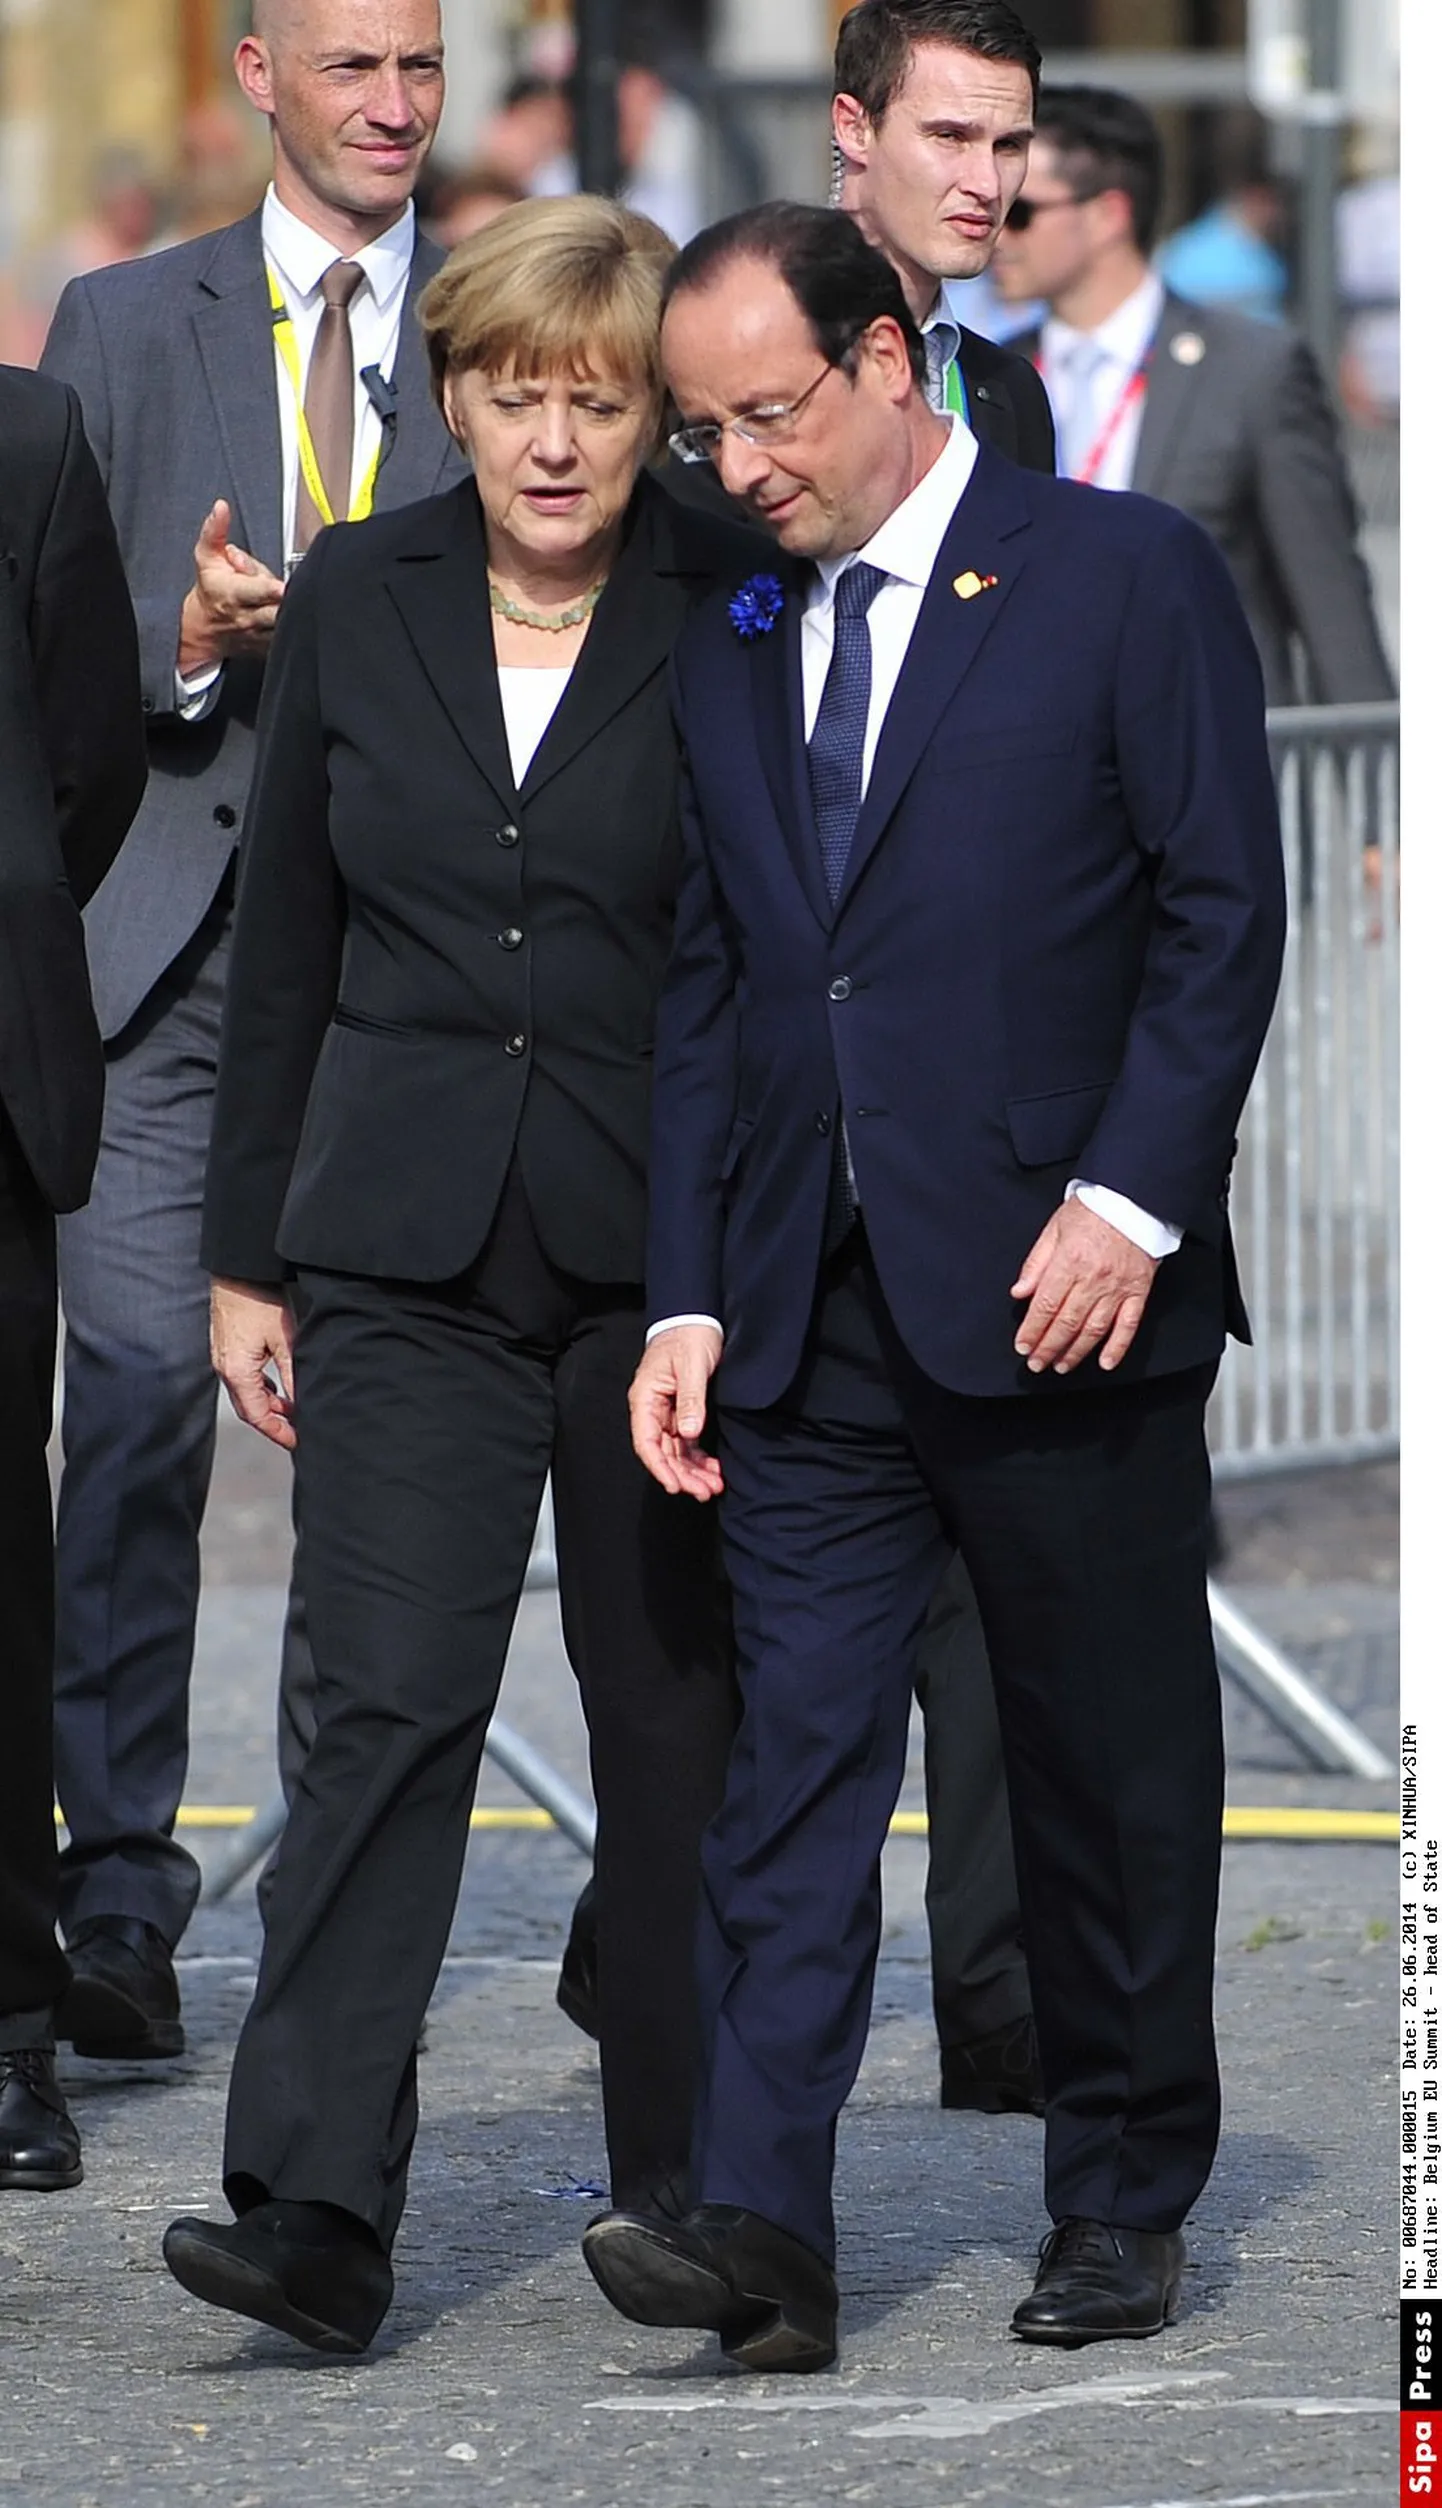 Saksa klantsler Angela Merkel vestlemas Prantsus presidendi François Hollande'iga.